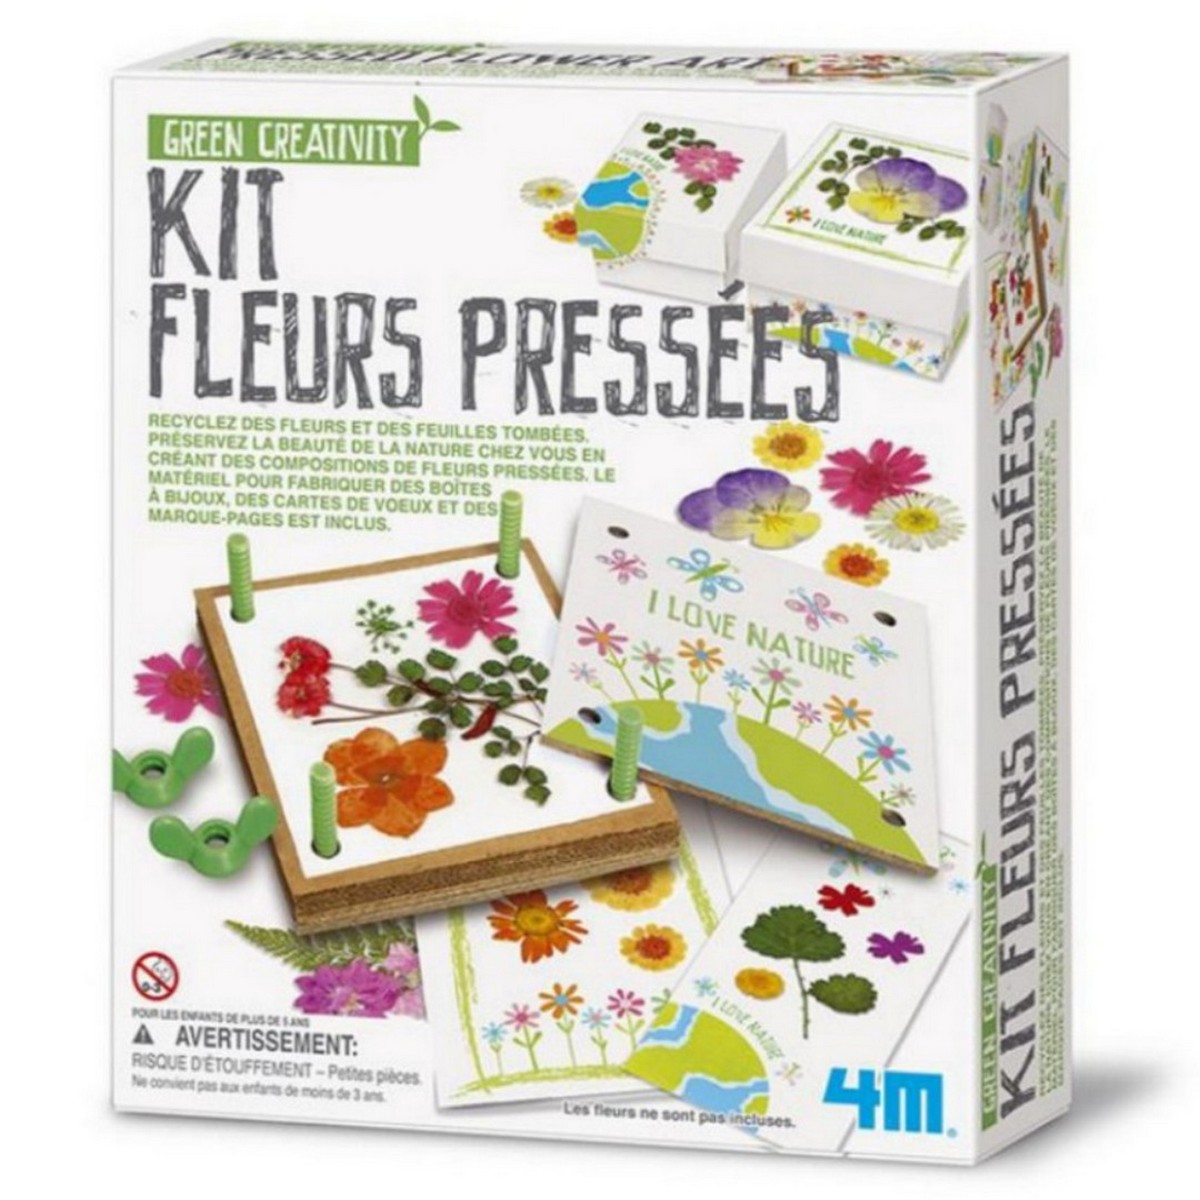 https://media.cdnws.com/_i/139692/5431/153/35/4m-green-creativity-kit-fleurs-pressees-des-sciences-une-experience-une-idee-cadeau-chez-ugo-et-lea-4.jpeg